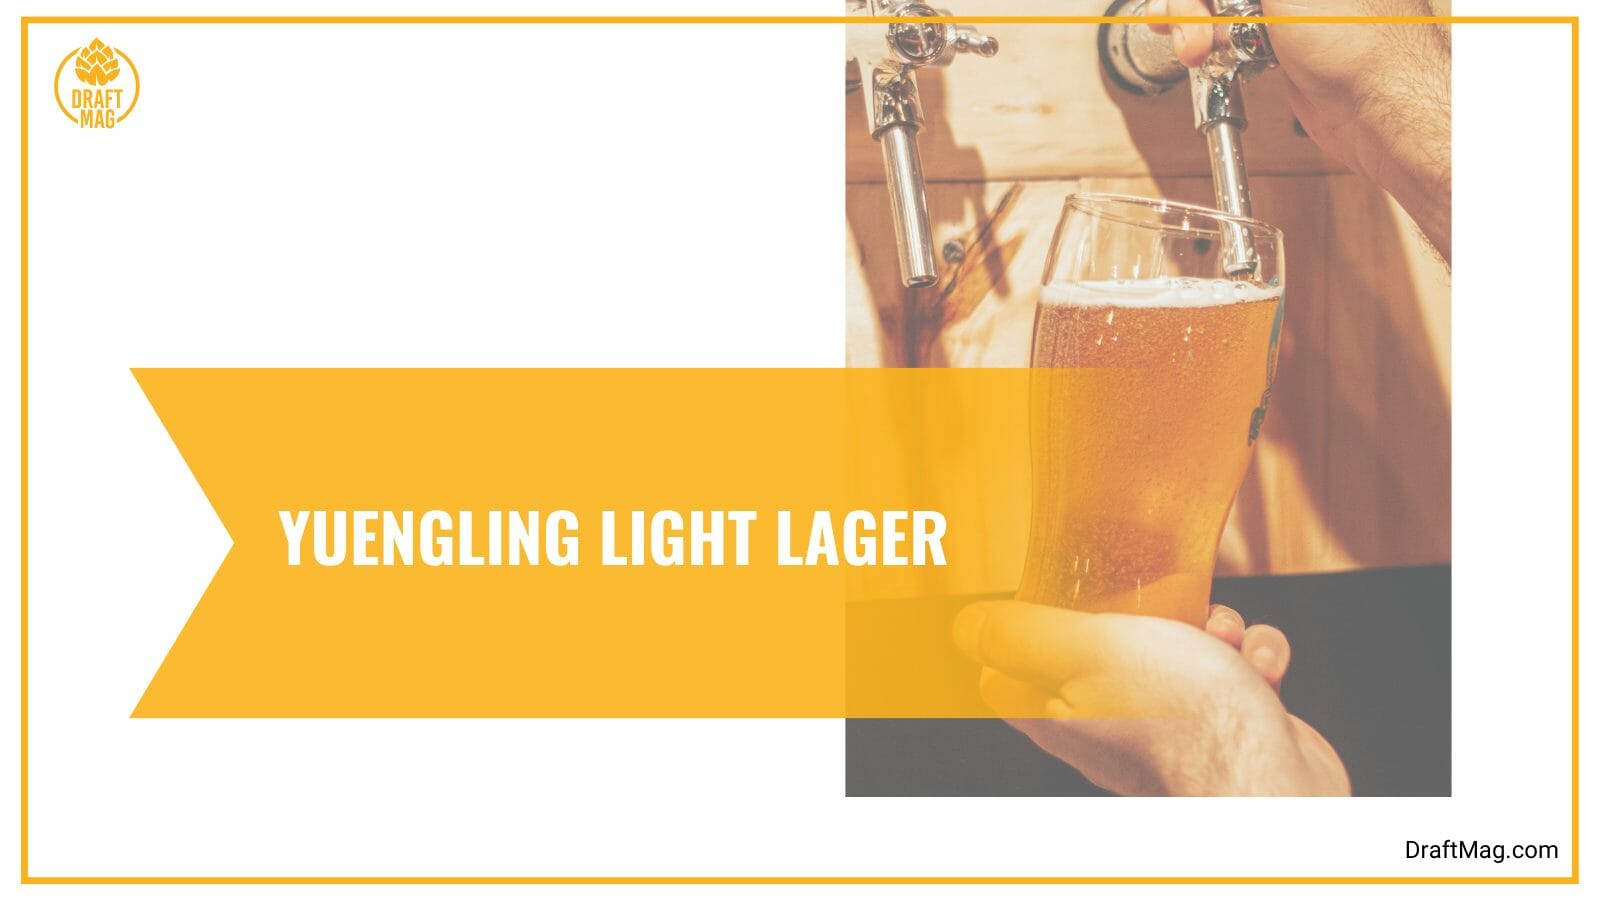 Yuengling light lager